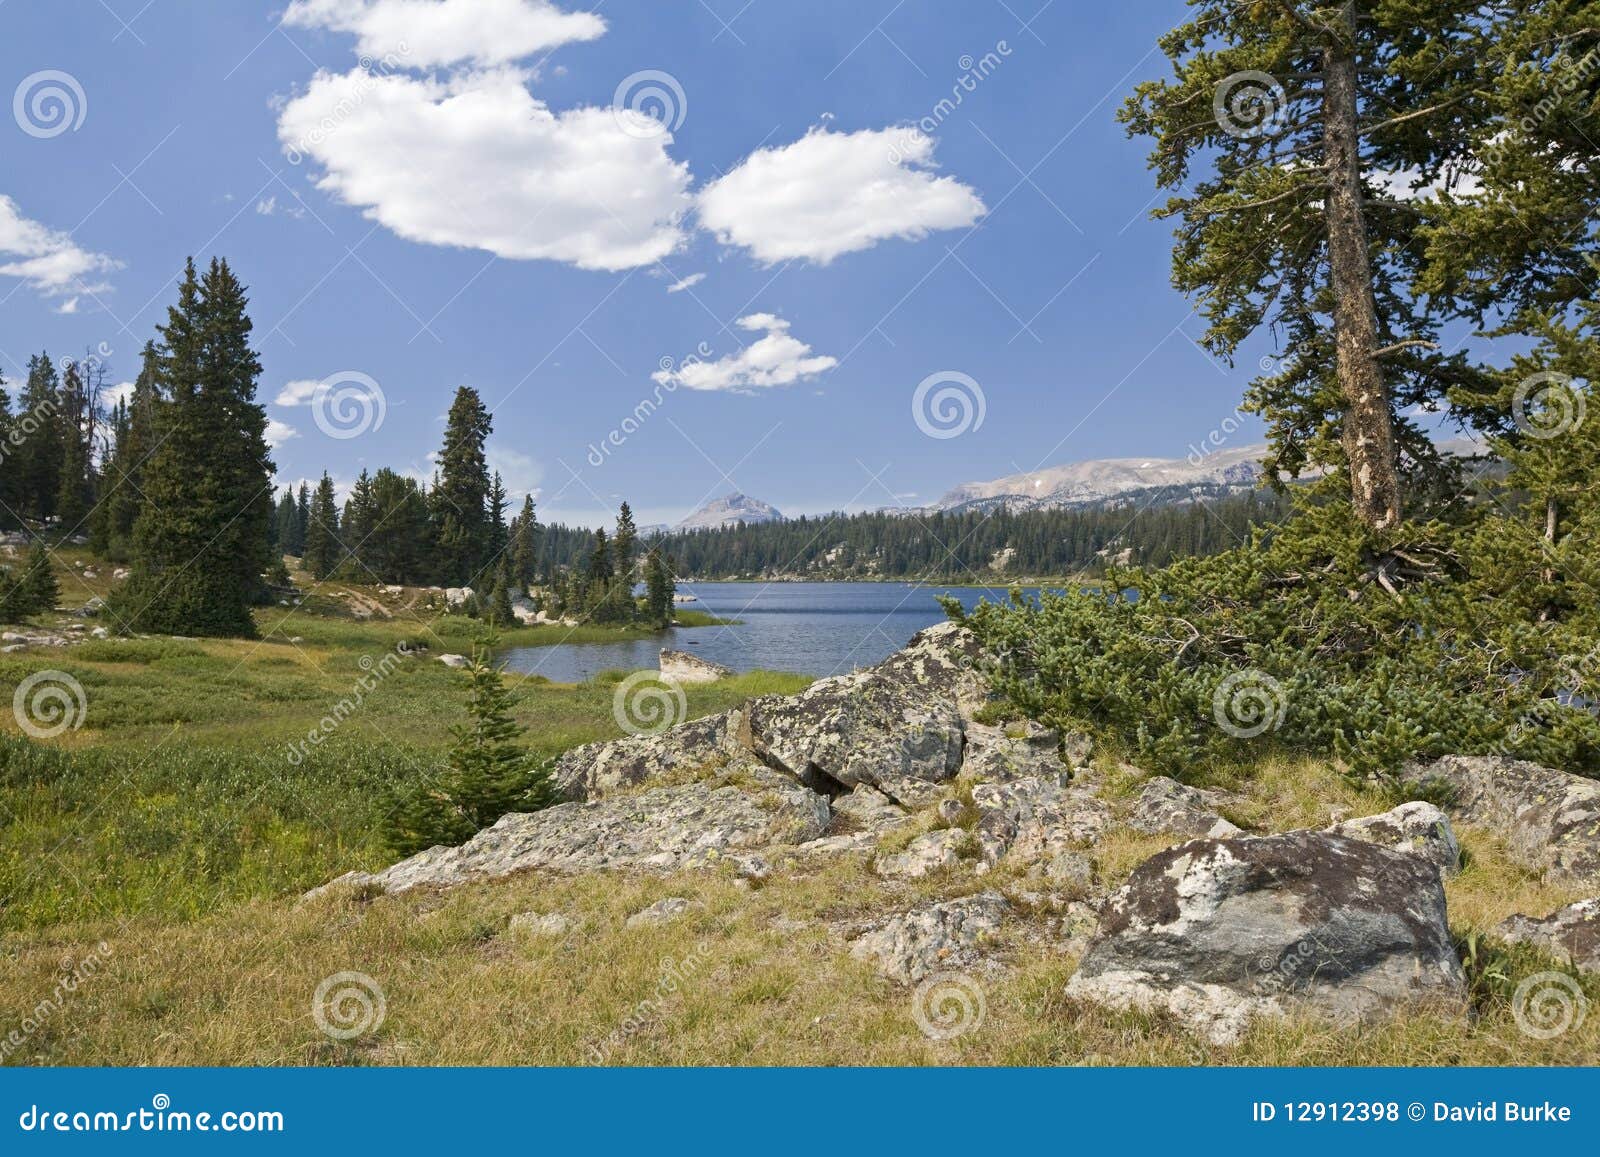 high mountain lake alpine fishing beartooth